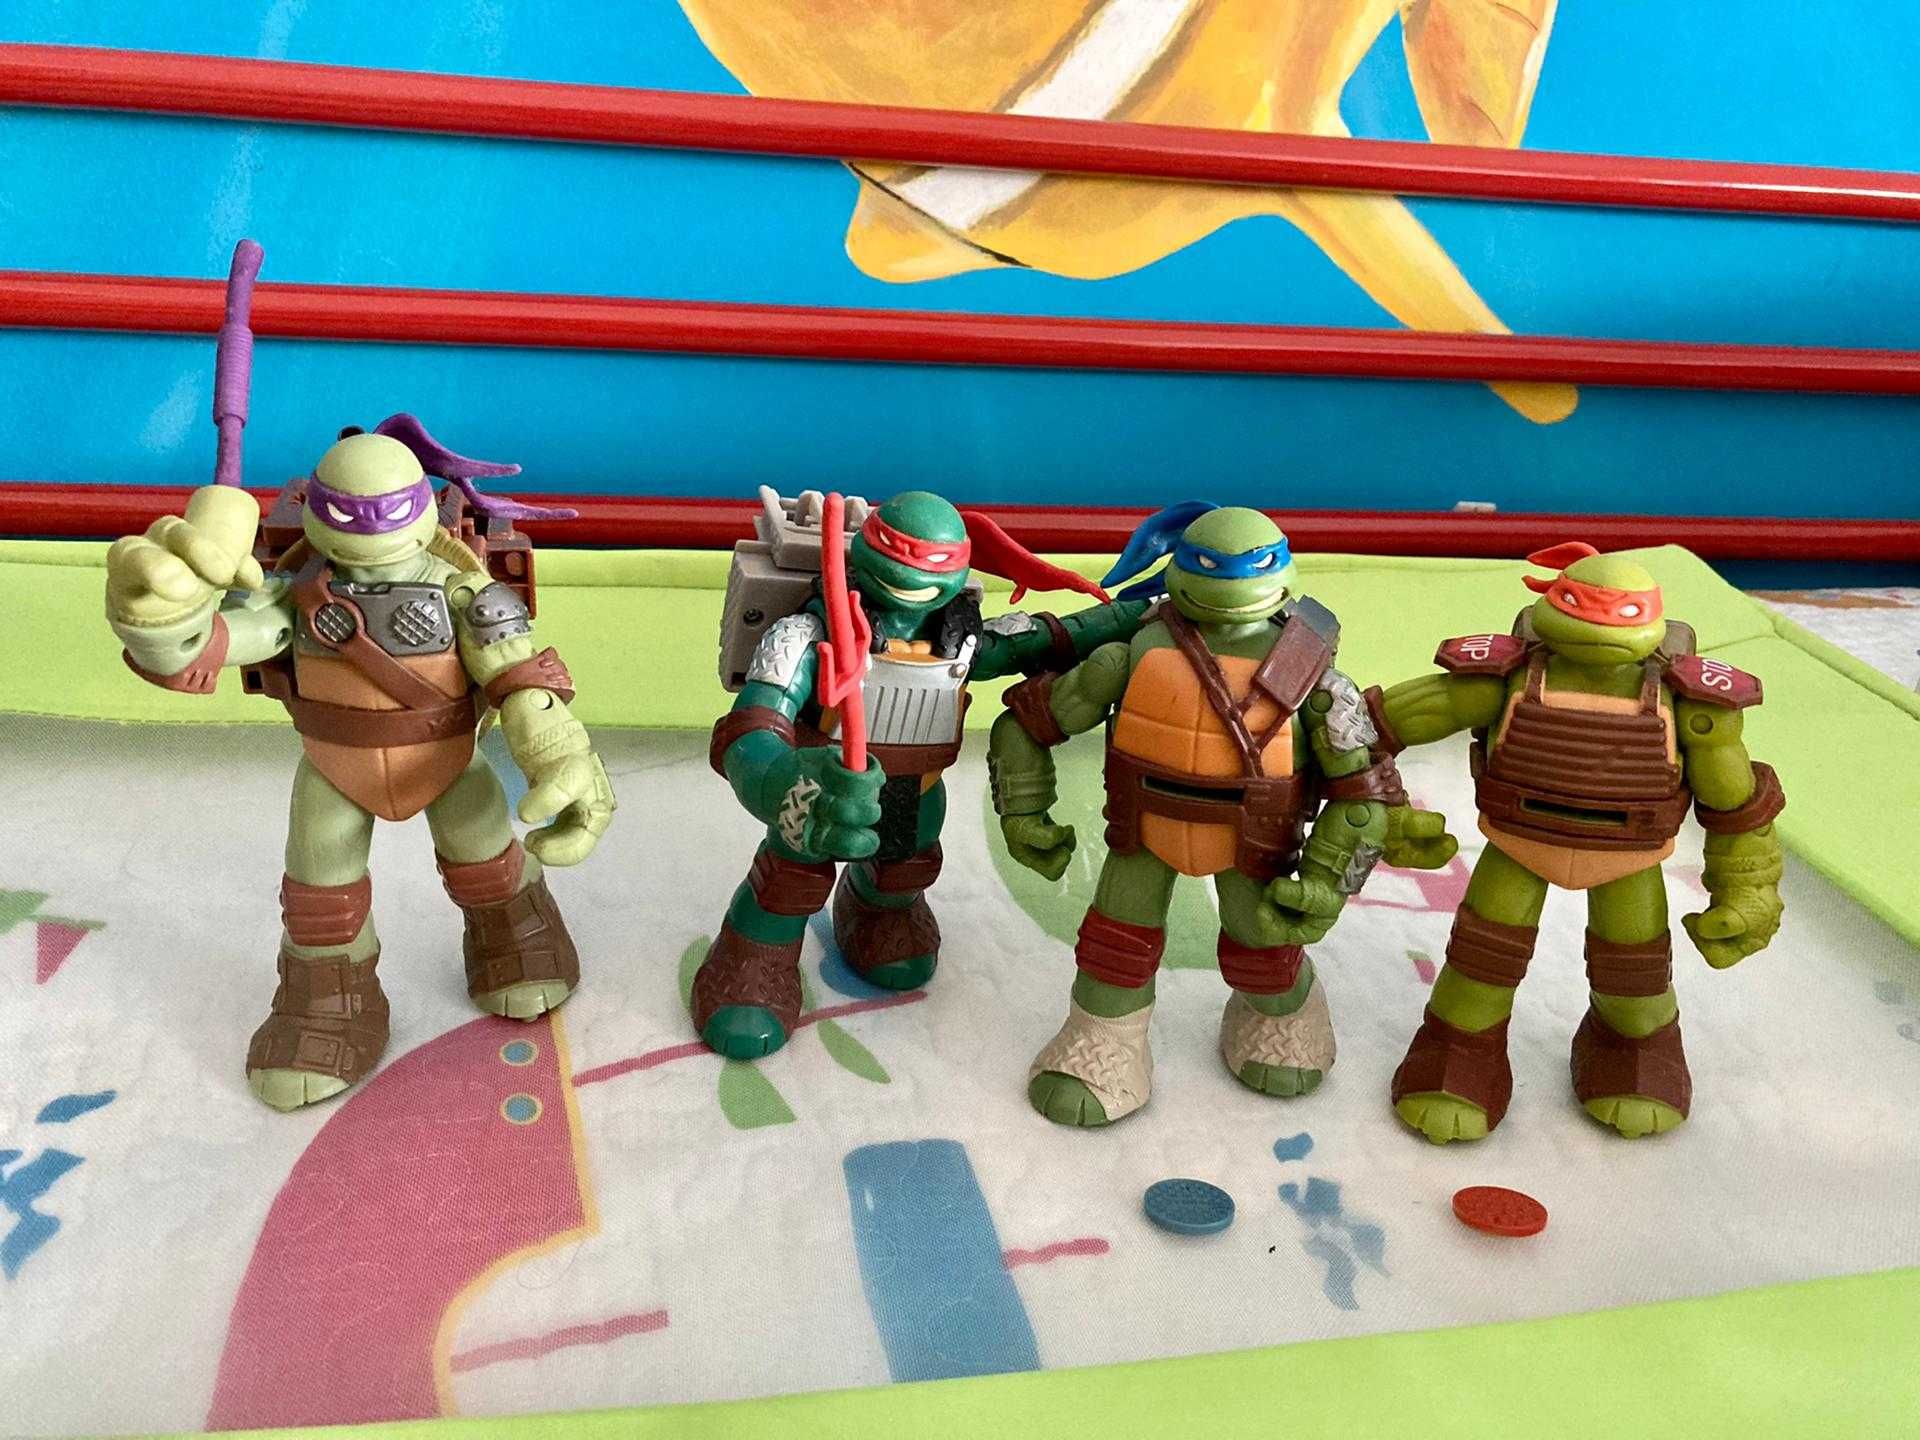 Vendo brinquedos das tartarugas ninja, stock completo ou por conjunto.